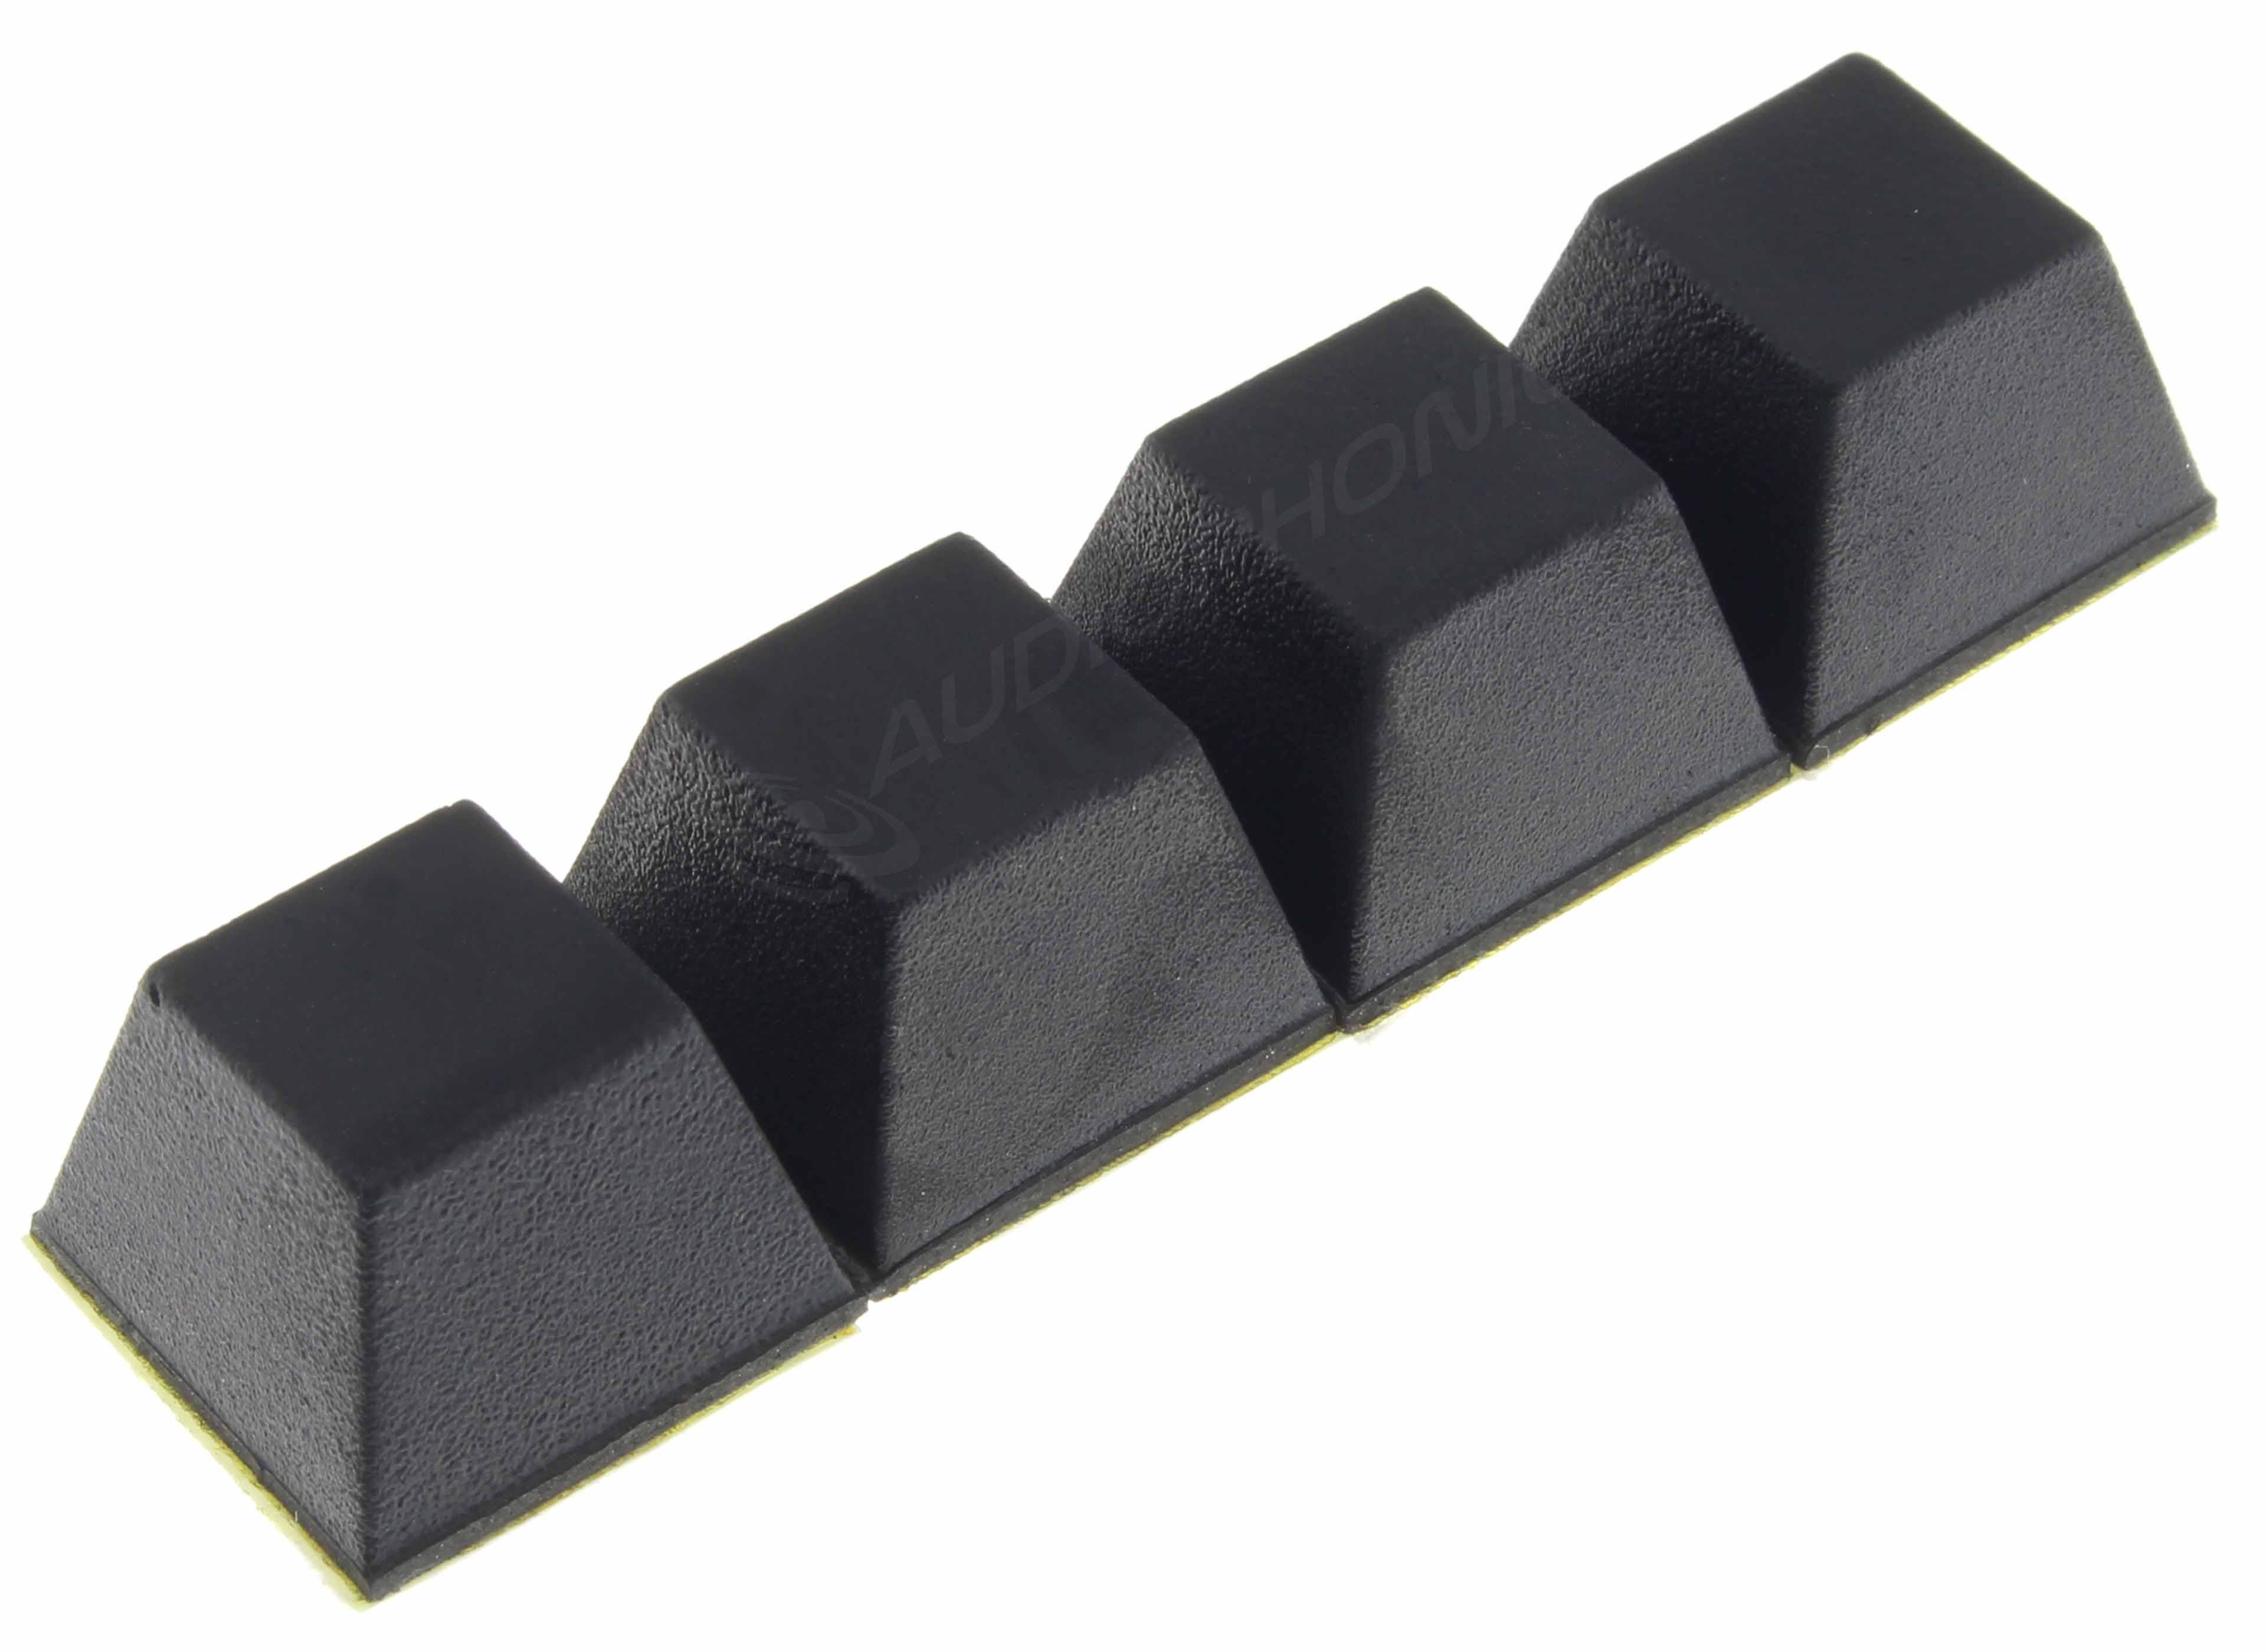 3M Polyurethane Damping Feet 20x14mm Black (Set x4)